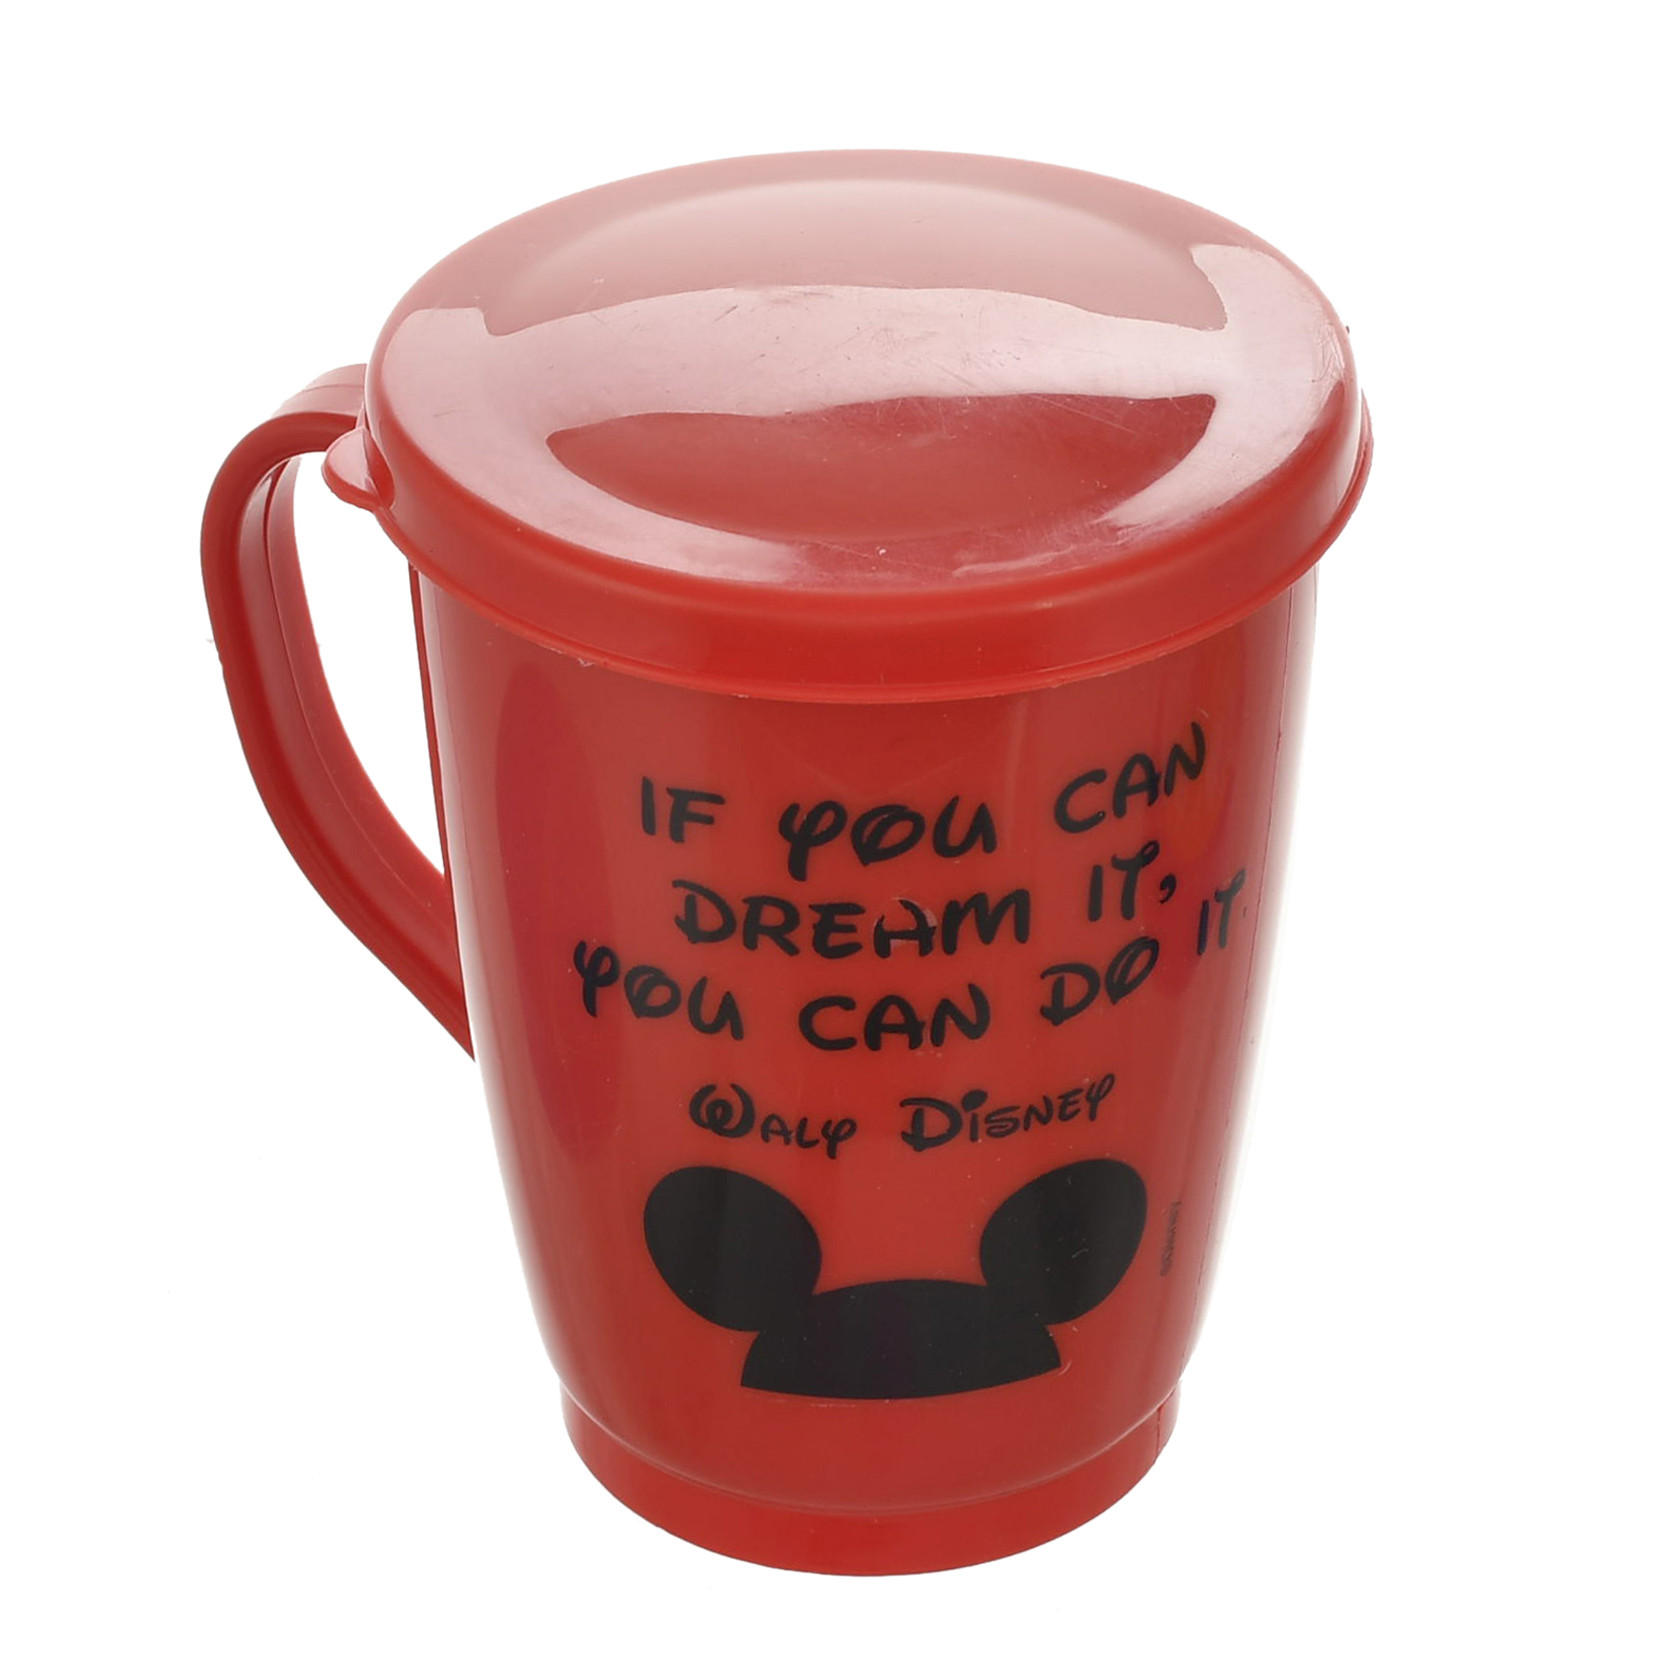 Kuber Industries Disney Printed Food Grade BPA Free Tea/Coffee Mug for Coffee Tea Cocoa, Camping Mugs with Lid, Pack of 6 (Light Grey & Grey & Red)